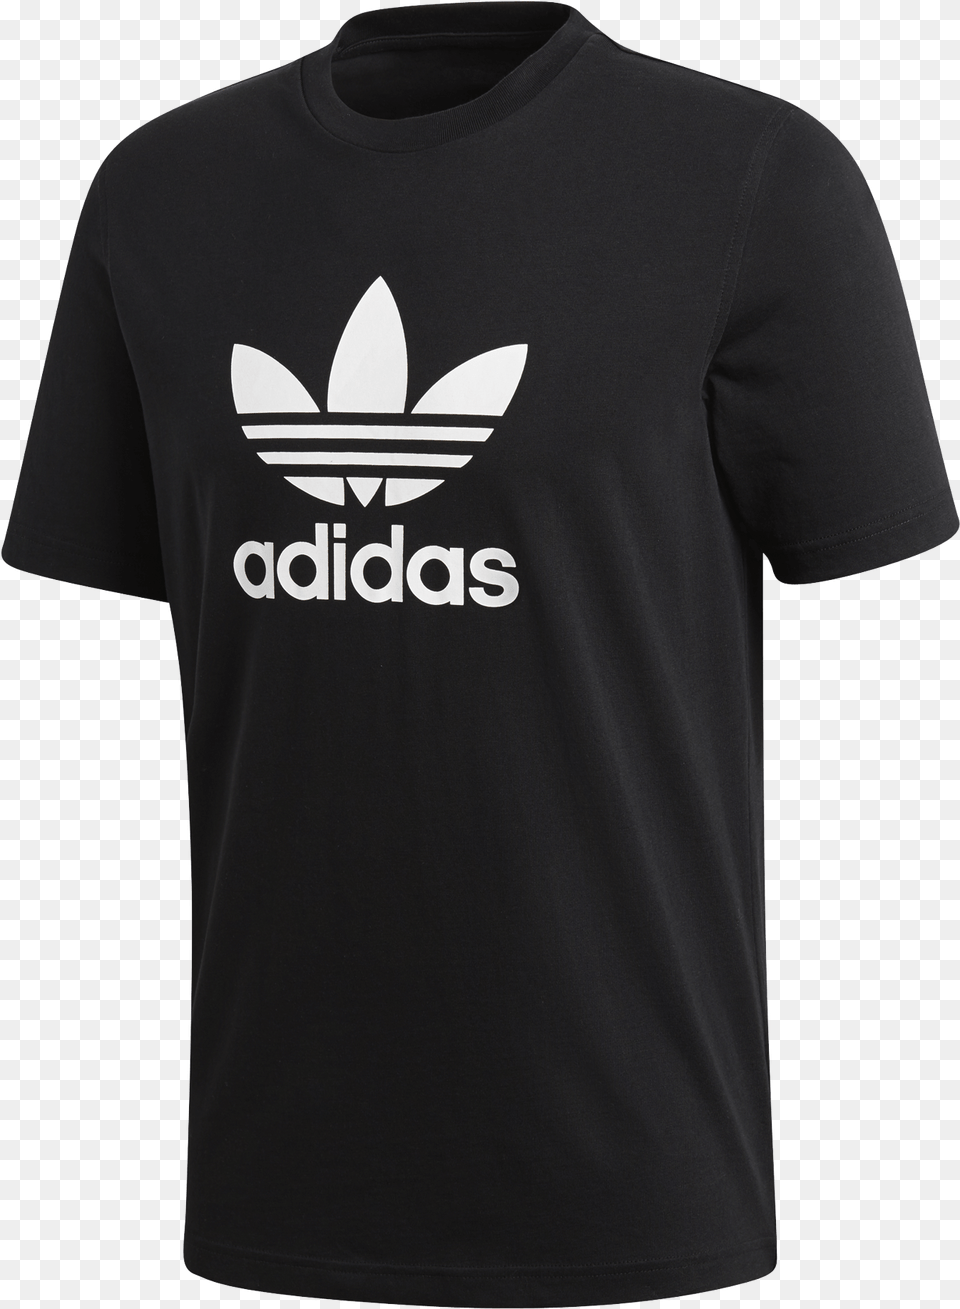 Adidas Originals Trefoil Tee Black Teen Suicide Band Shirt, Clothing, T-shirt Png Image